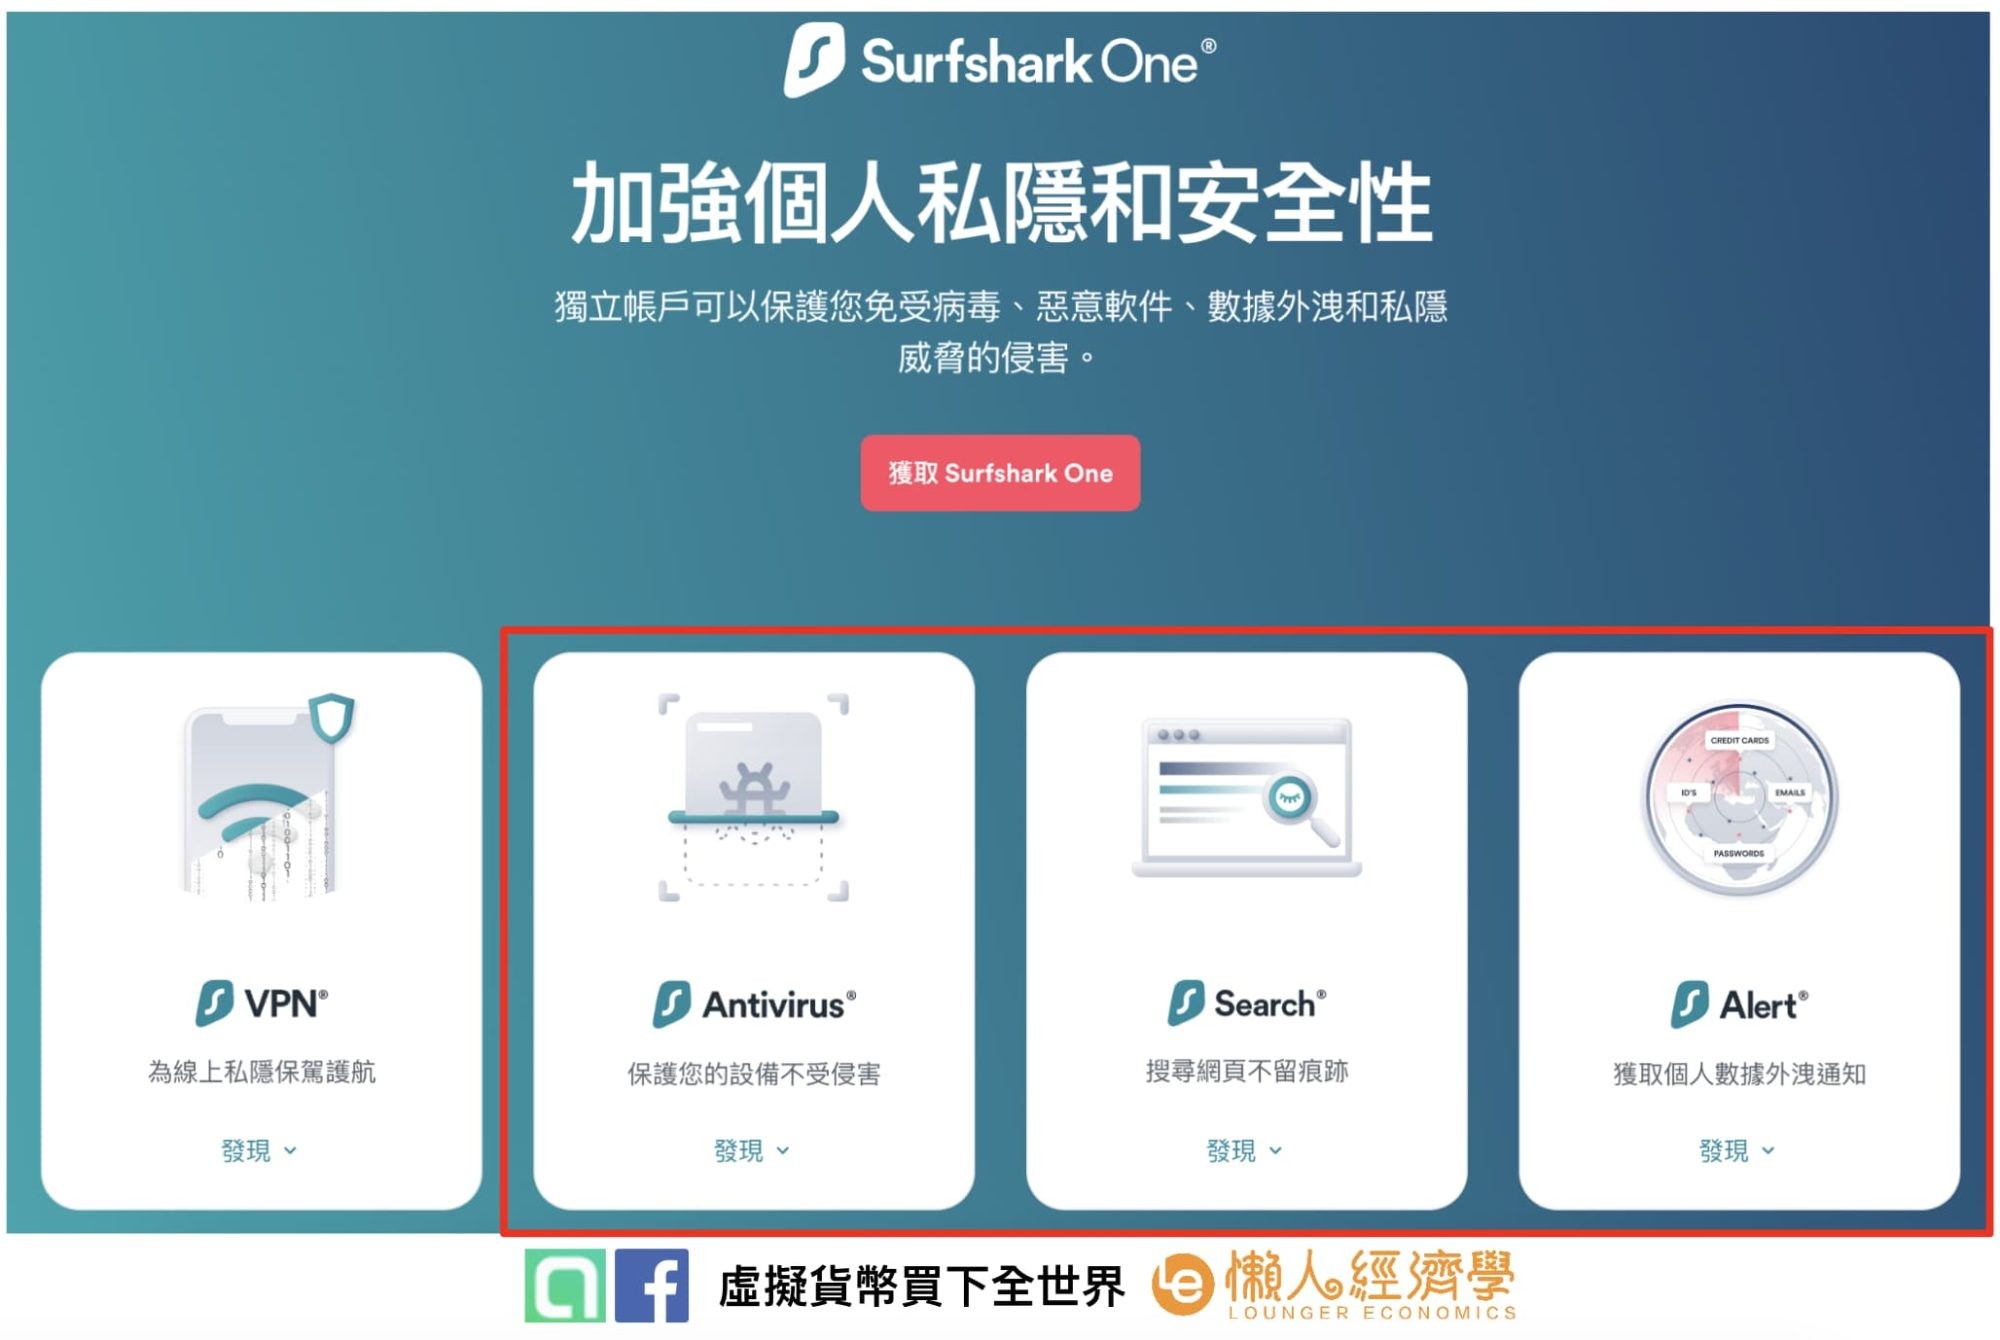 Surfshark One 是 Surfshark VPN 的附加服務，分別是 Antivirus、Search 以及 Alert，Surfshark VPN 本身只負責在你上網時更改 IP 地址同時保護你的隱私。